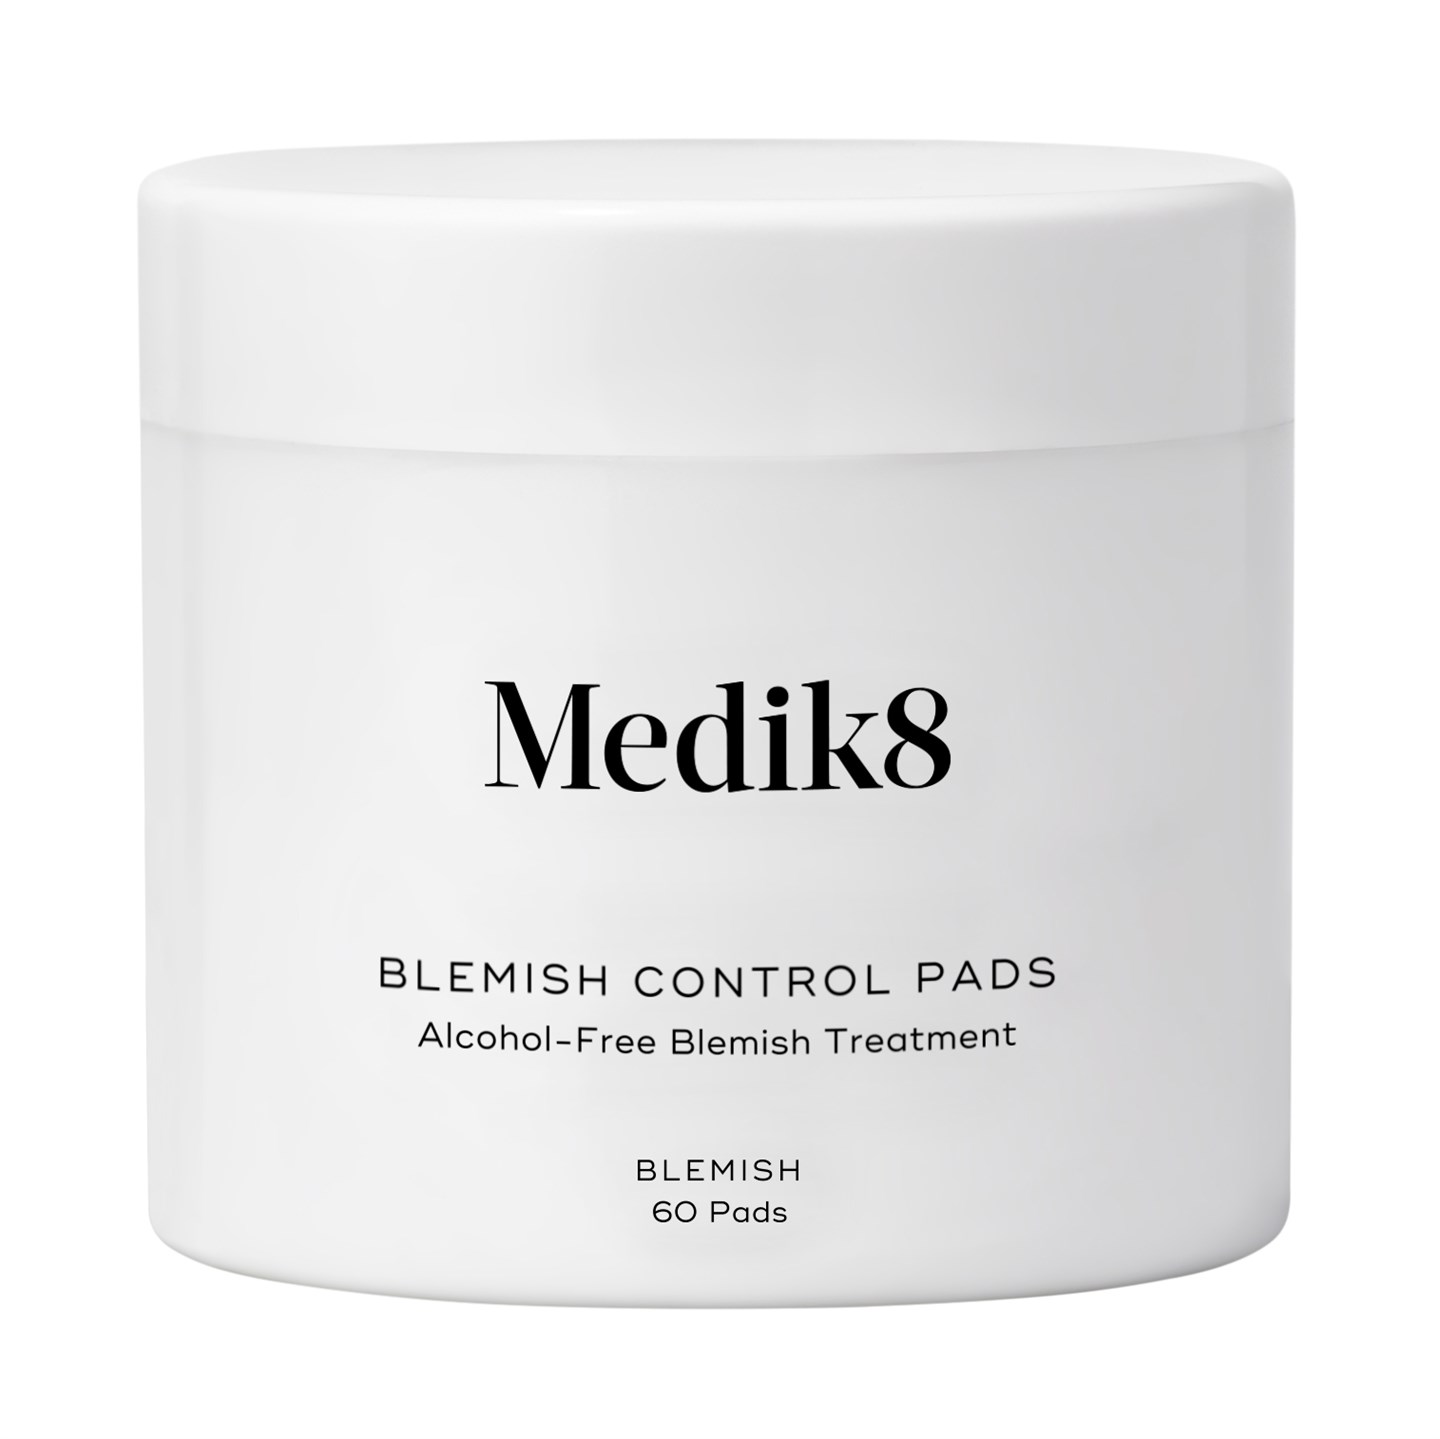 Medik8 Blemish Control Pads - 60 pads